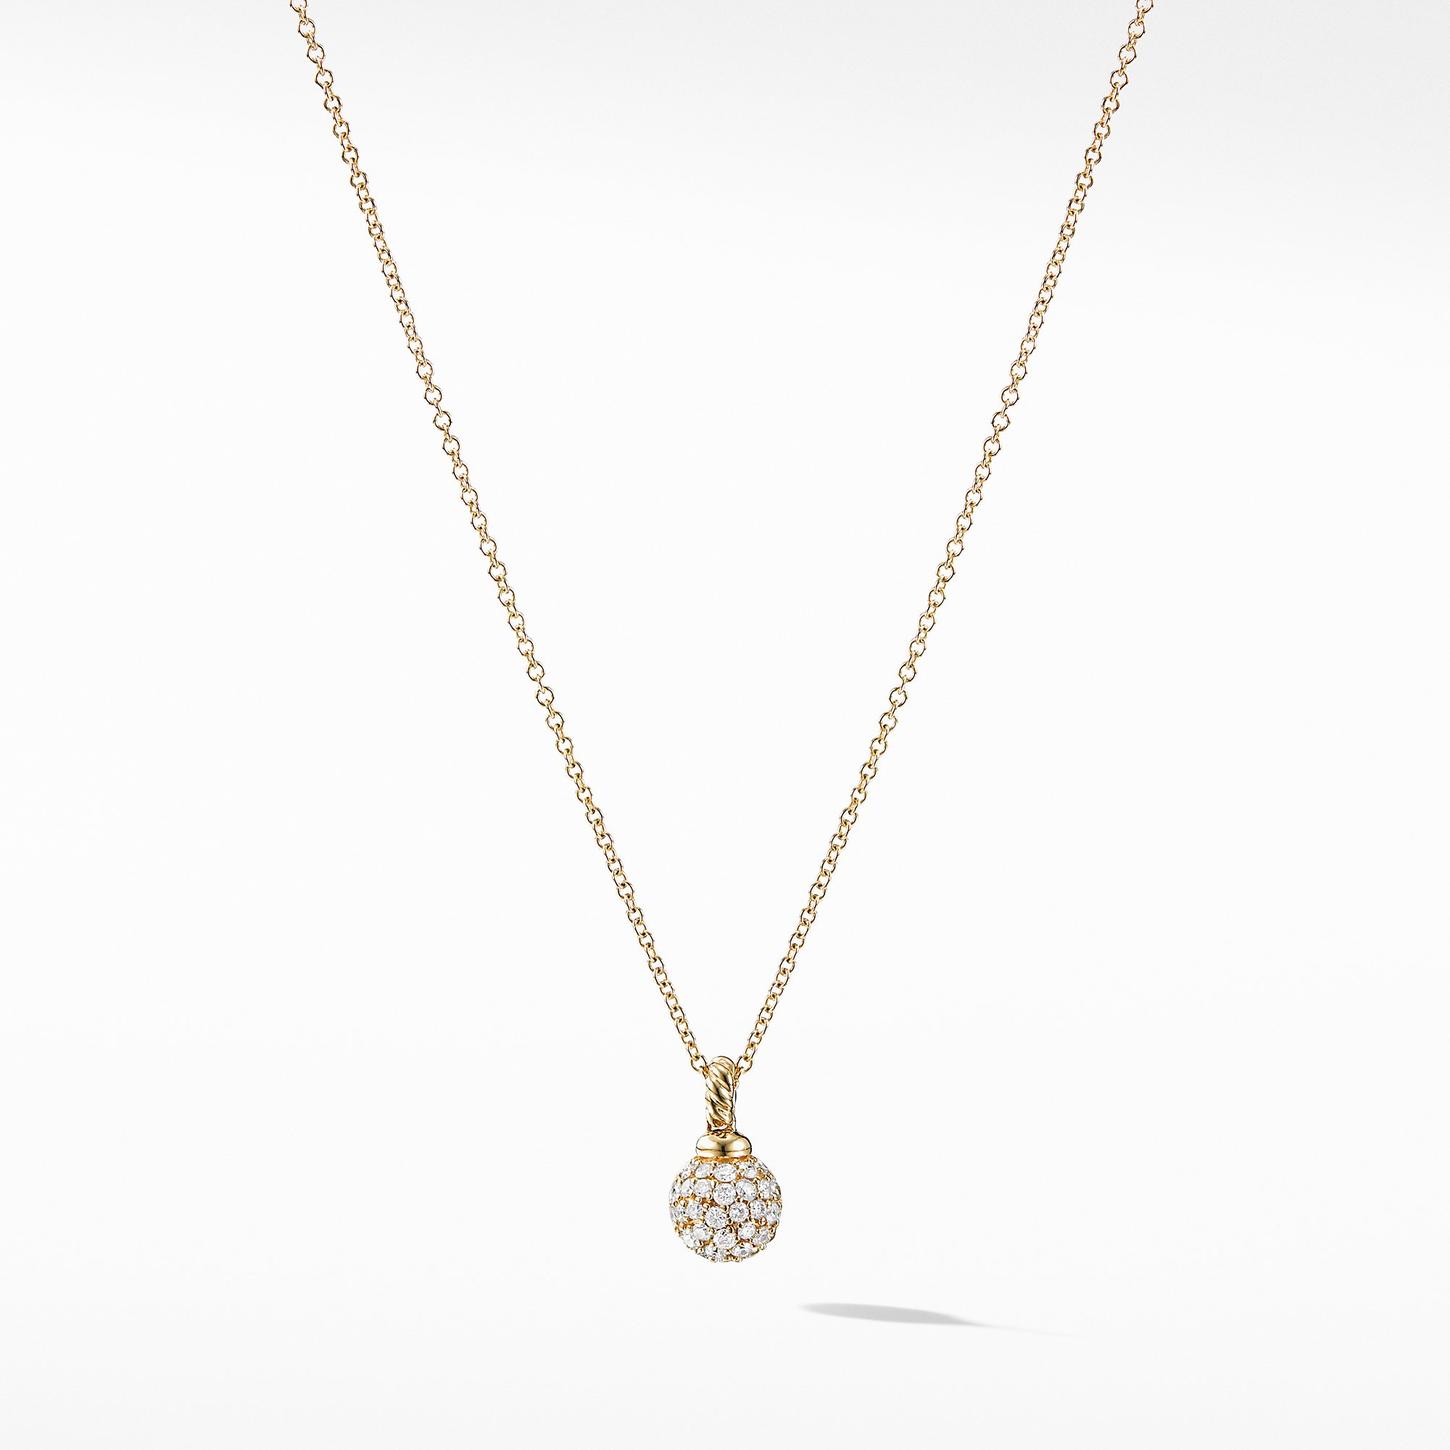 David Yurman Solari Pave Pendant Necklace with Diamonds in 18K Gold 0